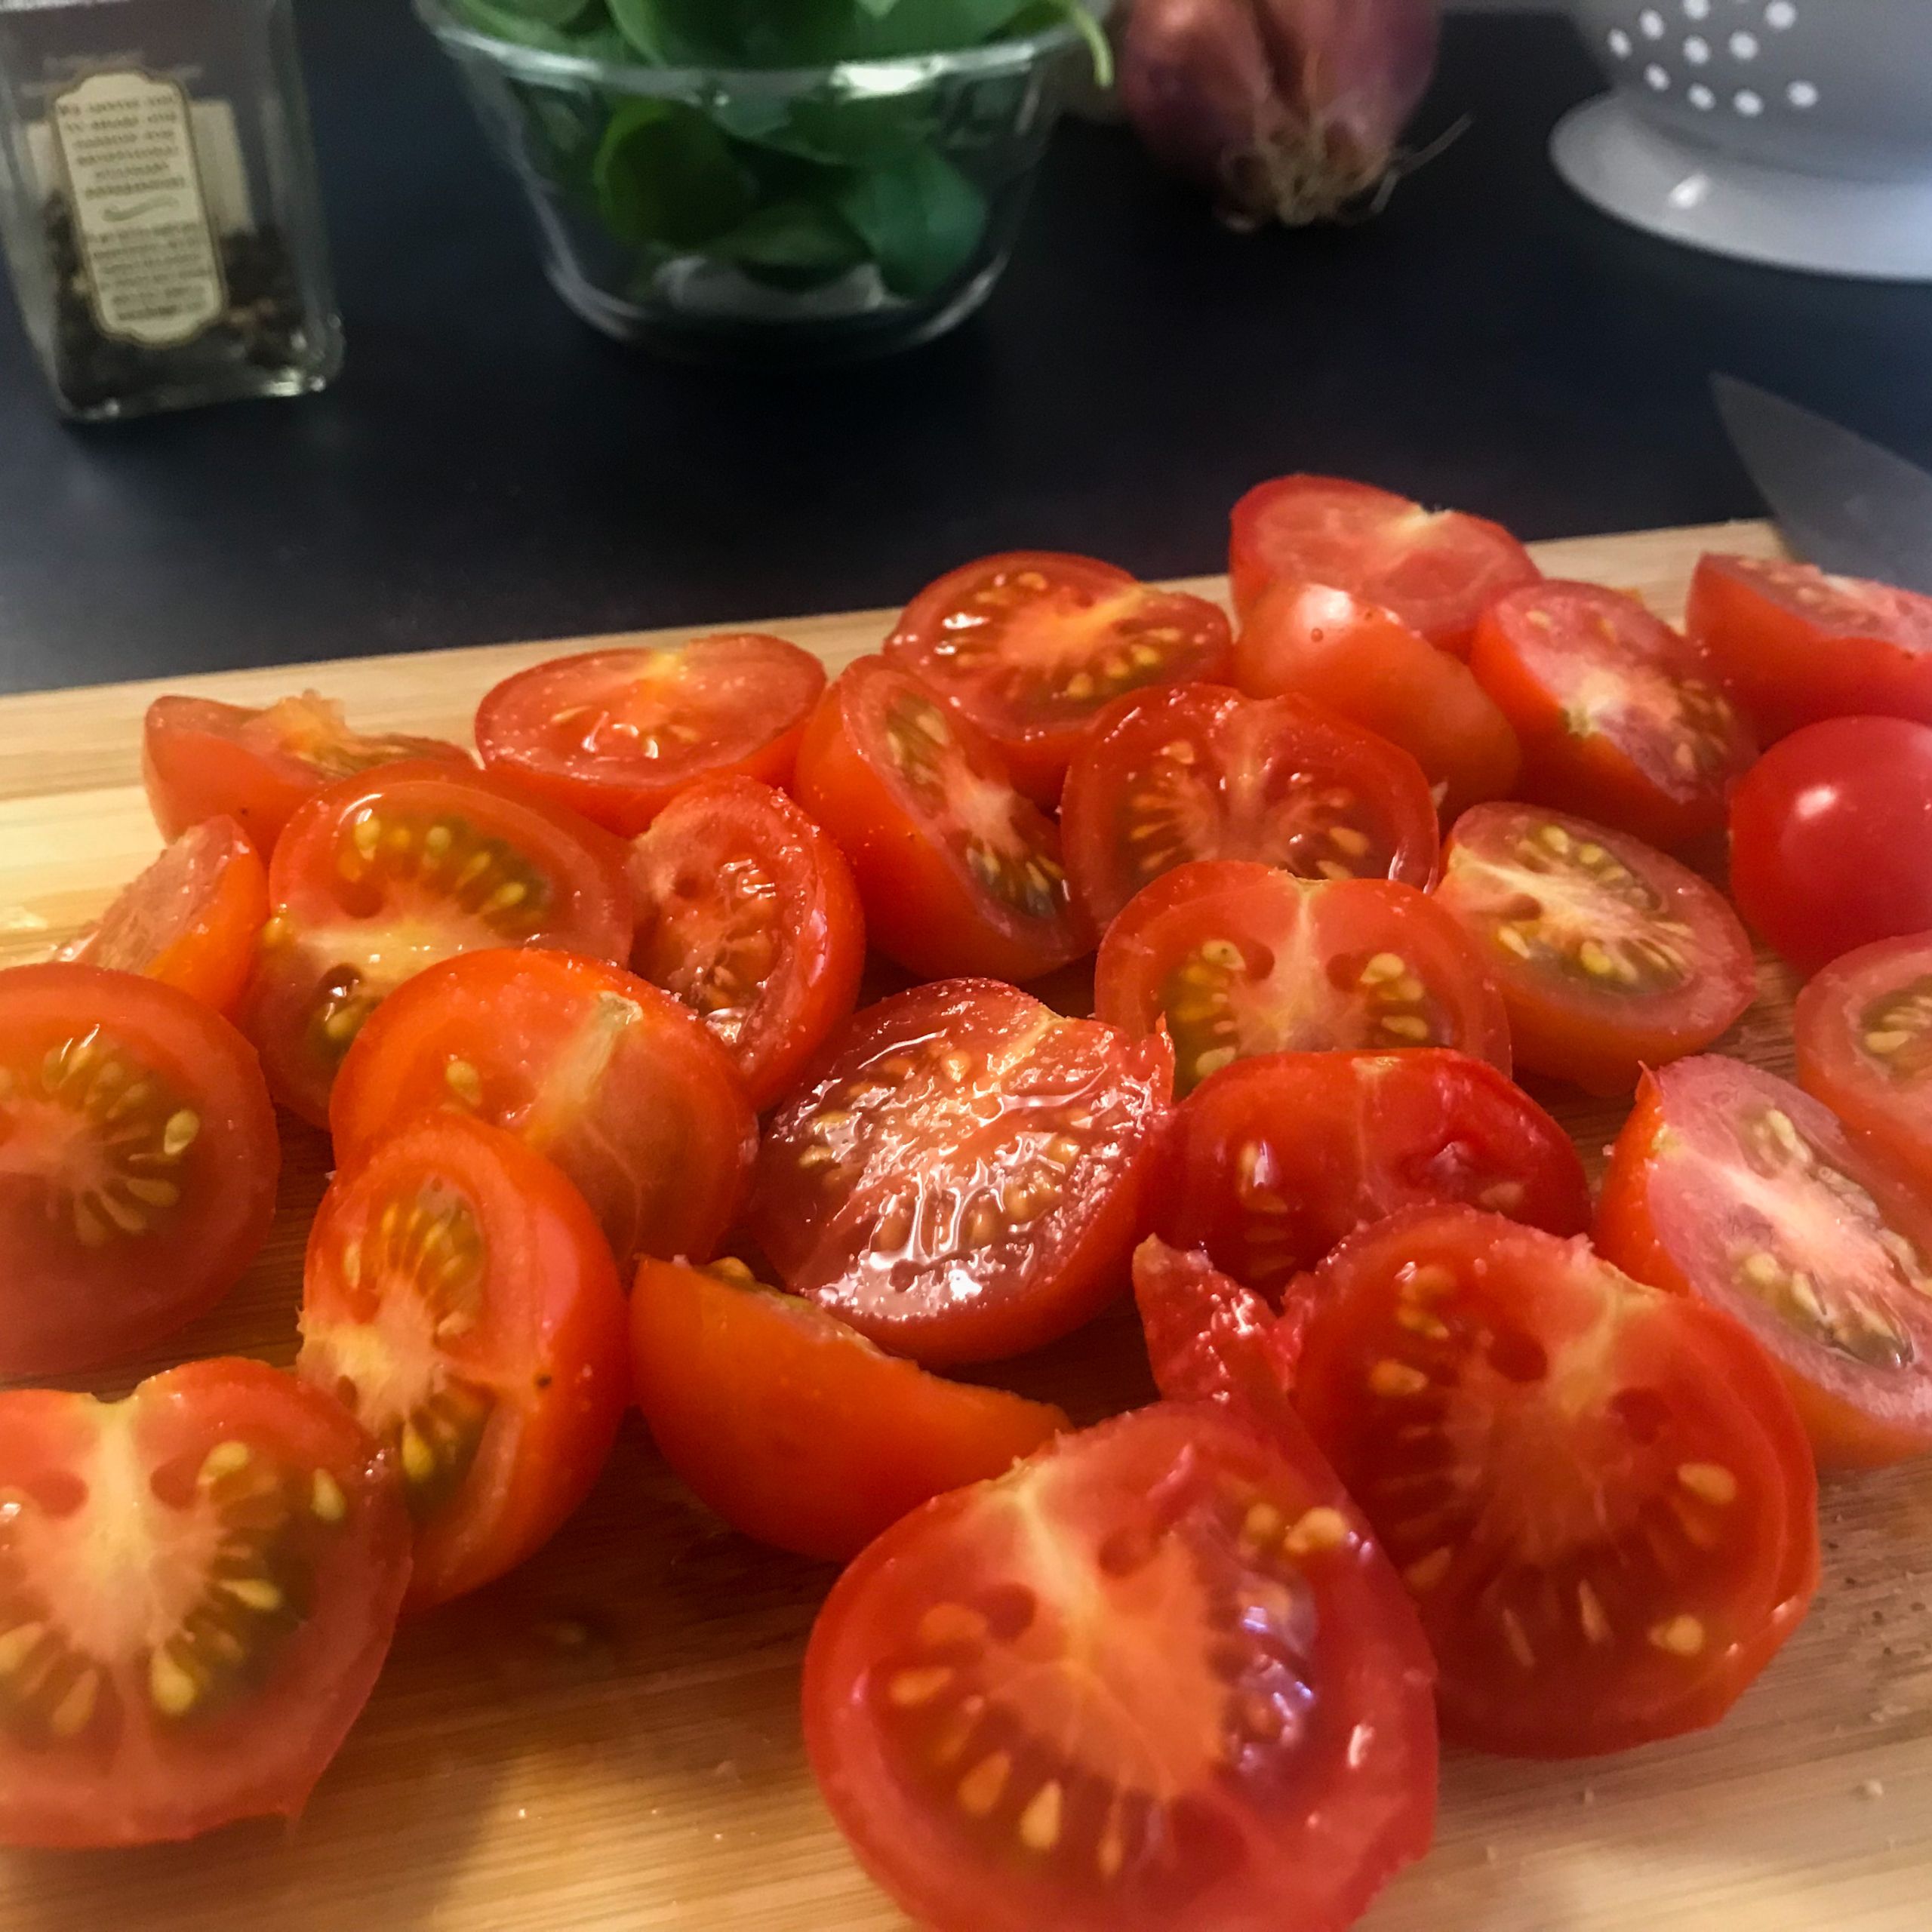 cut tomatoes on a cutting board